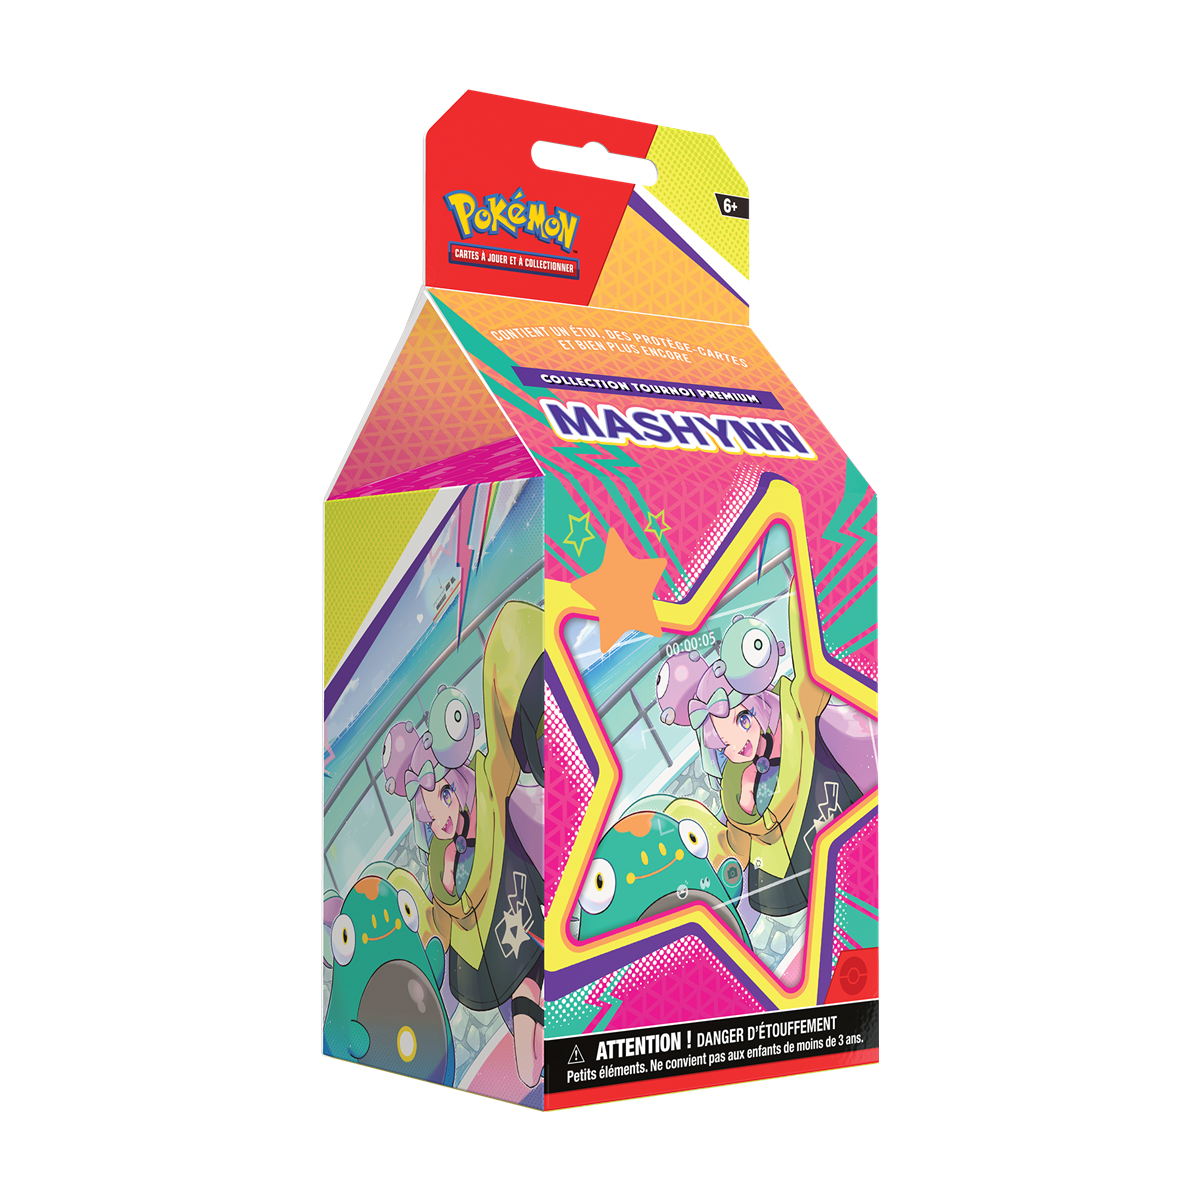 Pokémon - Community Box - Mashynn Premium Tournament Collection - FR